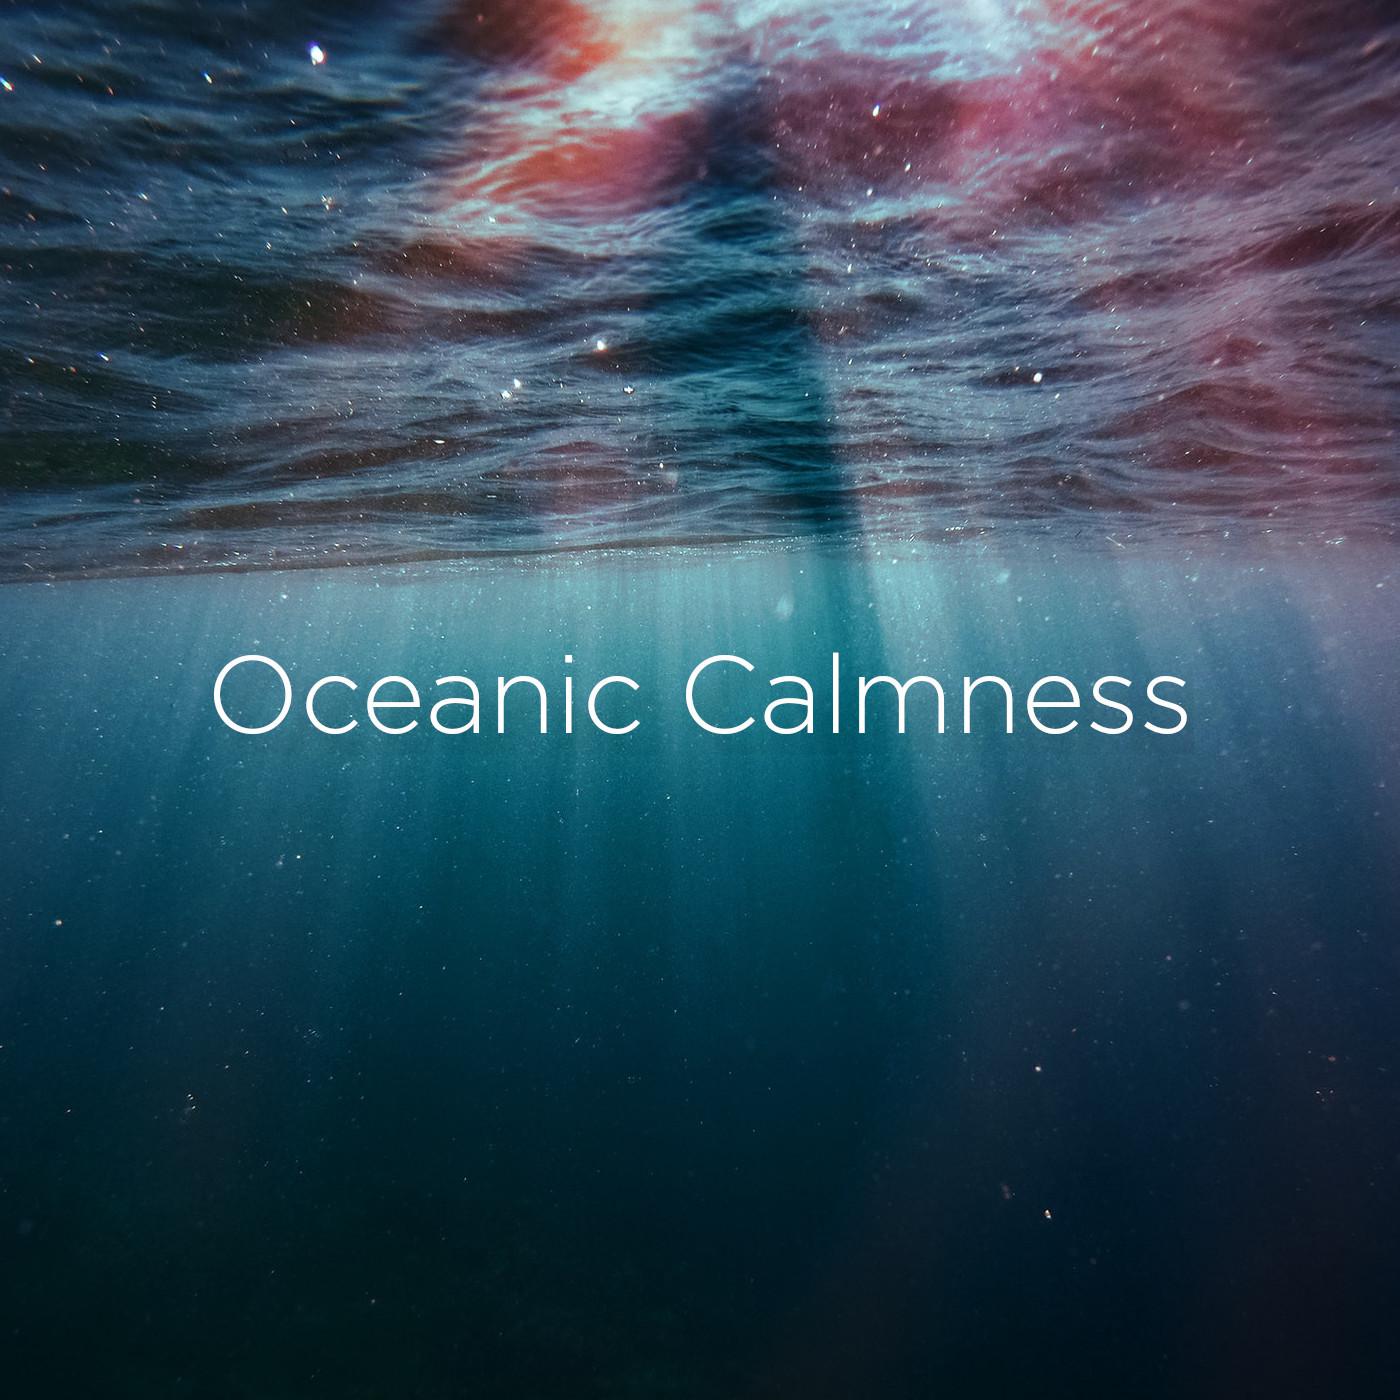 Oceanic Calmness